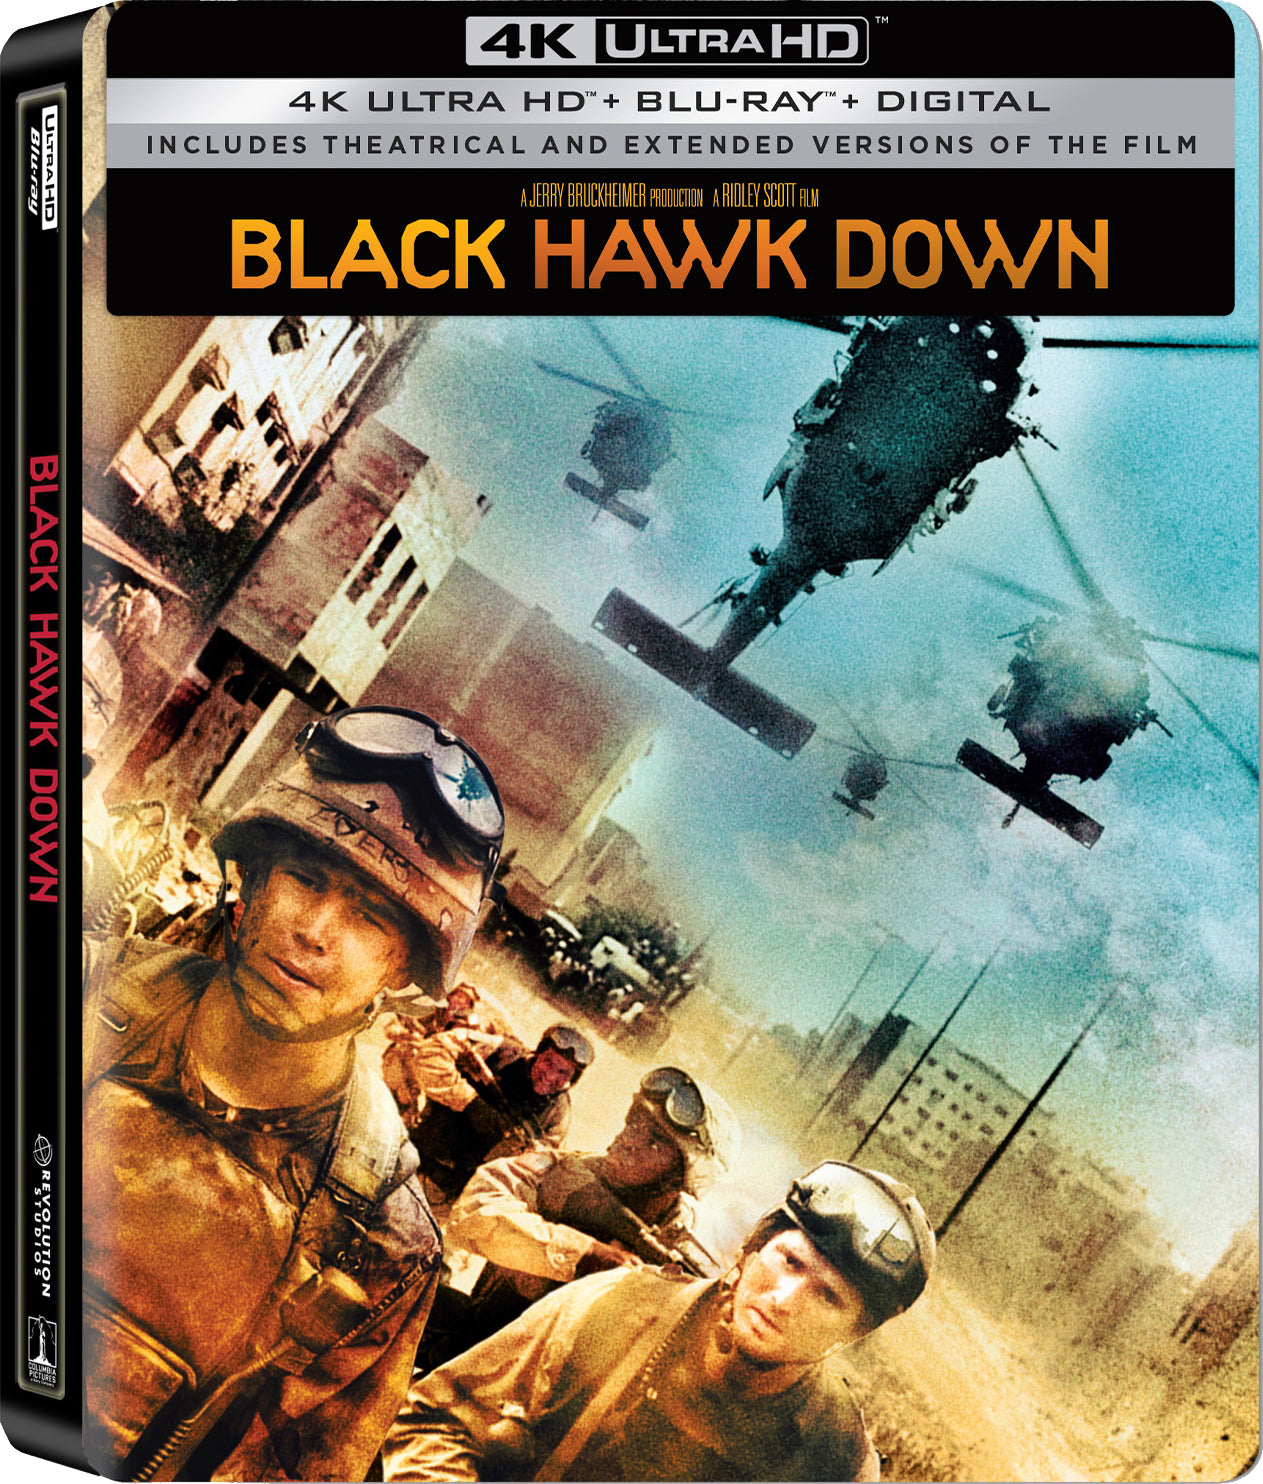 BLACK HAWK DOWN (LIMITED EDITION) 4K UHD/BLU-RAY STEELBOOK